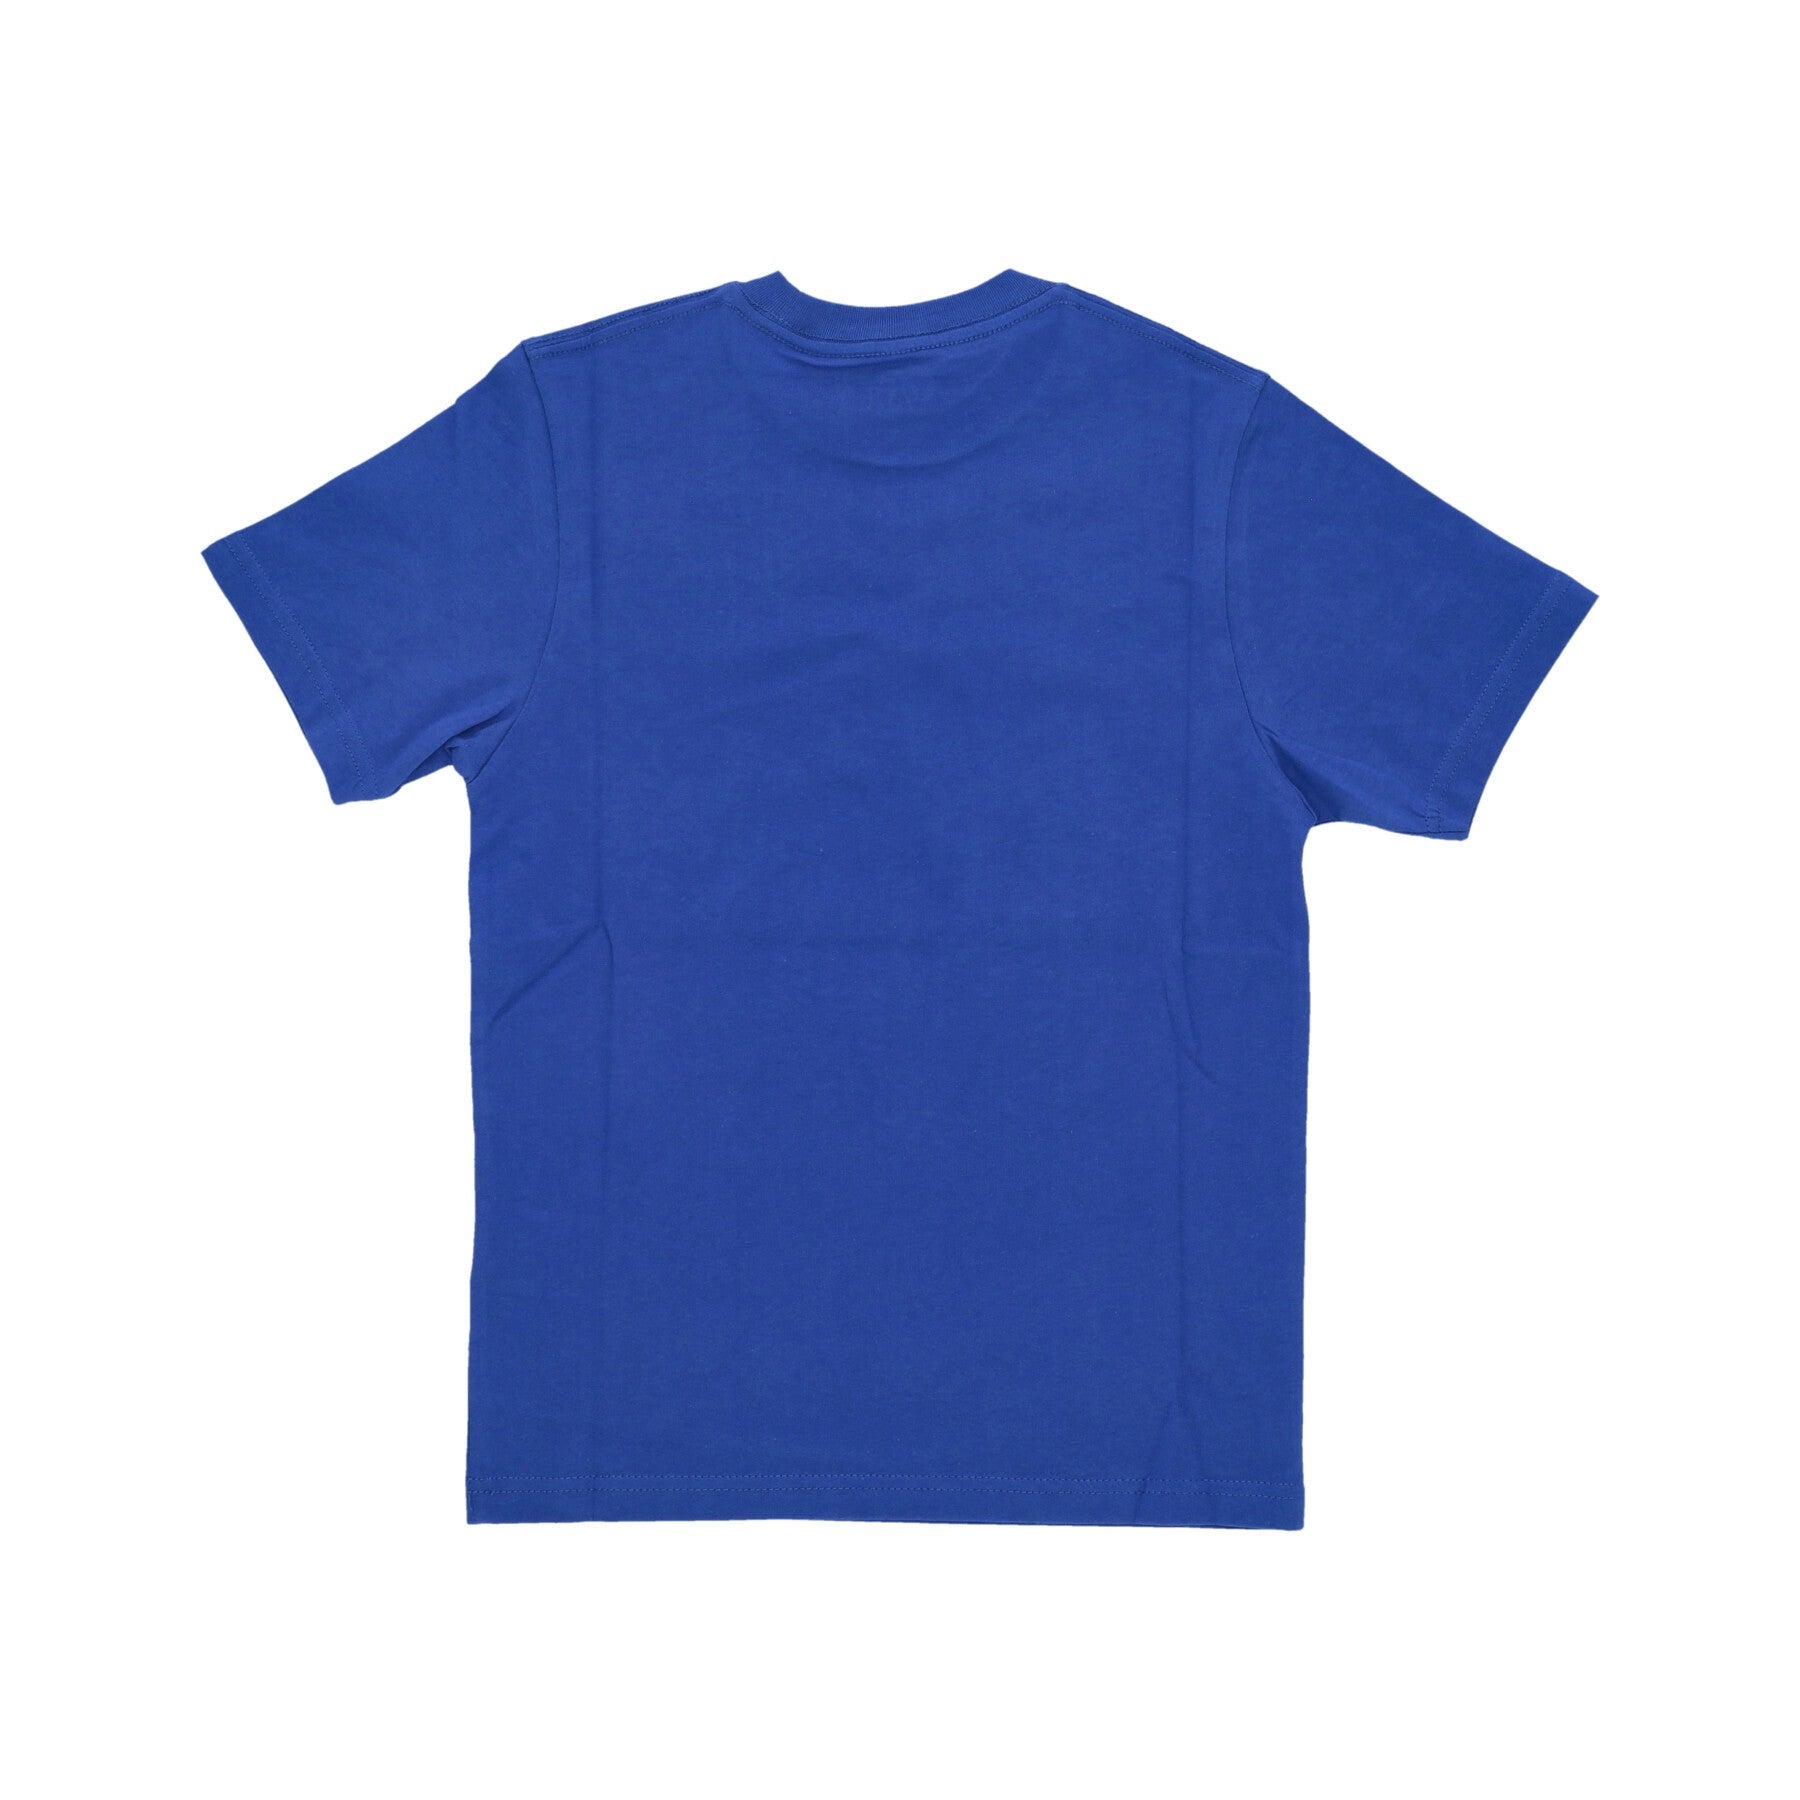 Reflective Checkerboard Flame Tee Boy's T-Shirt True Blue